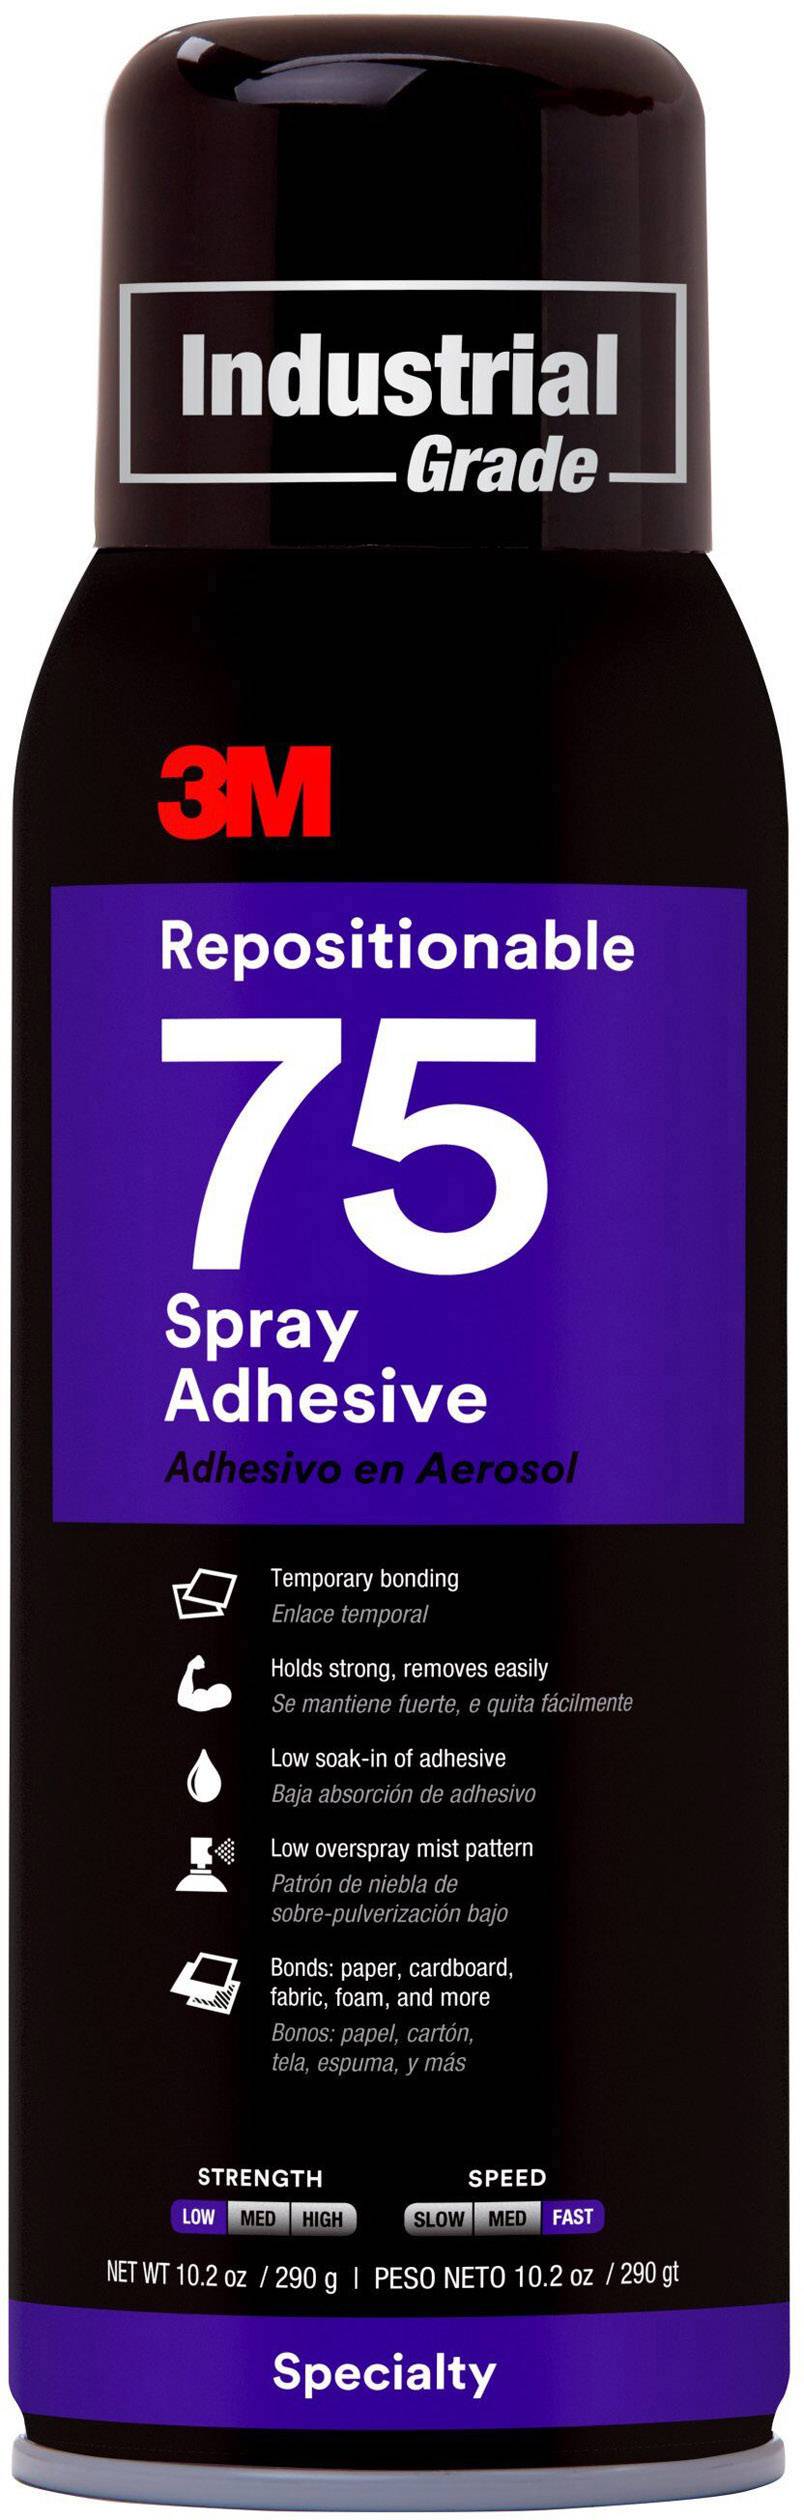 3M Repositionable adhesive Spray 75 for temporary bonding